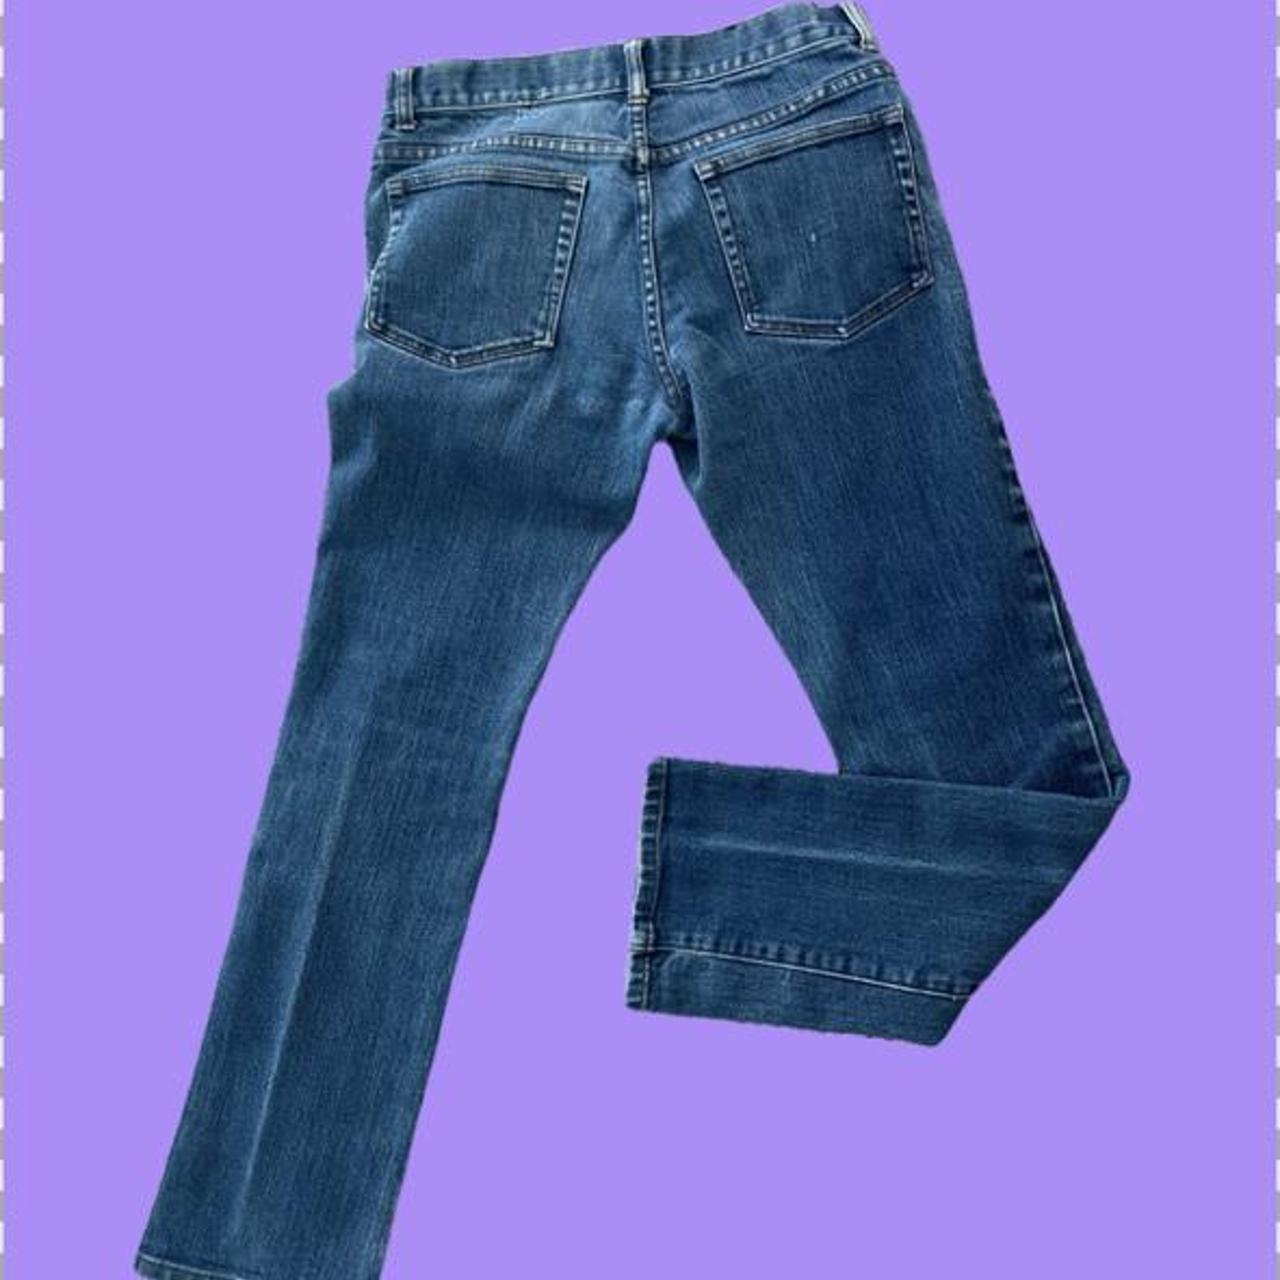 Khaki Krew Women's Blue and Navy Jeans (2)